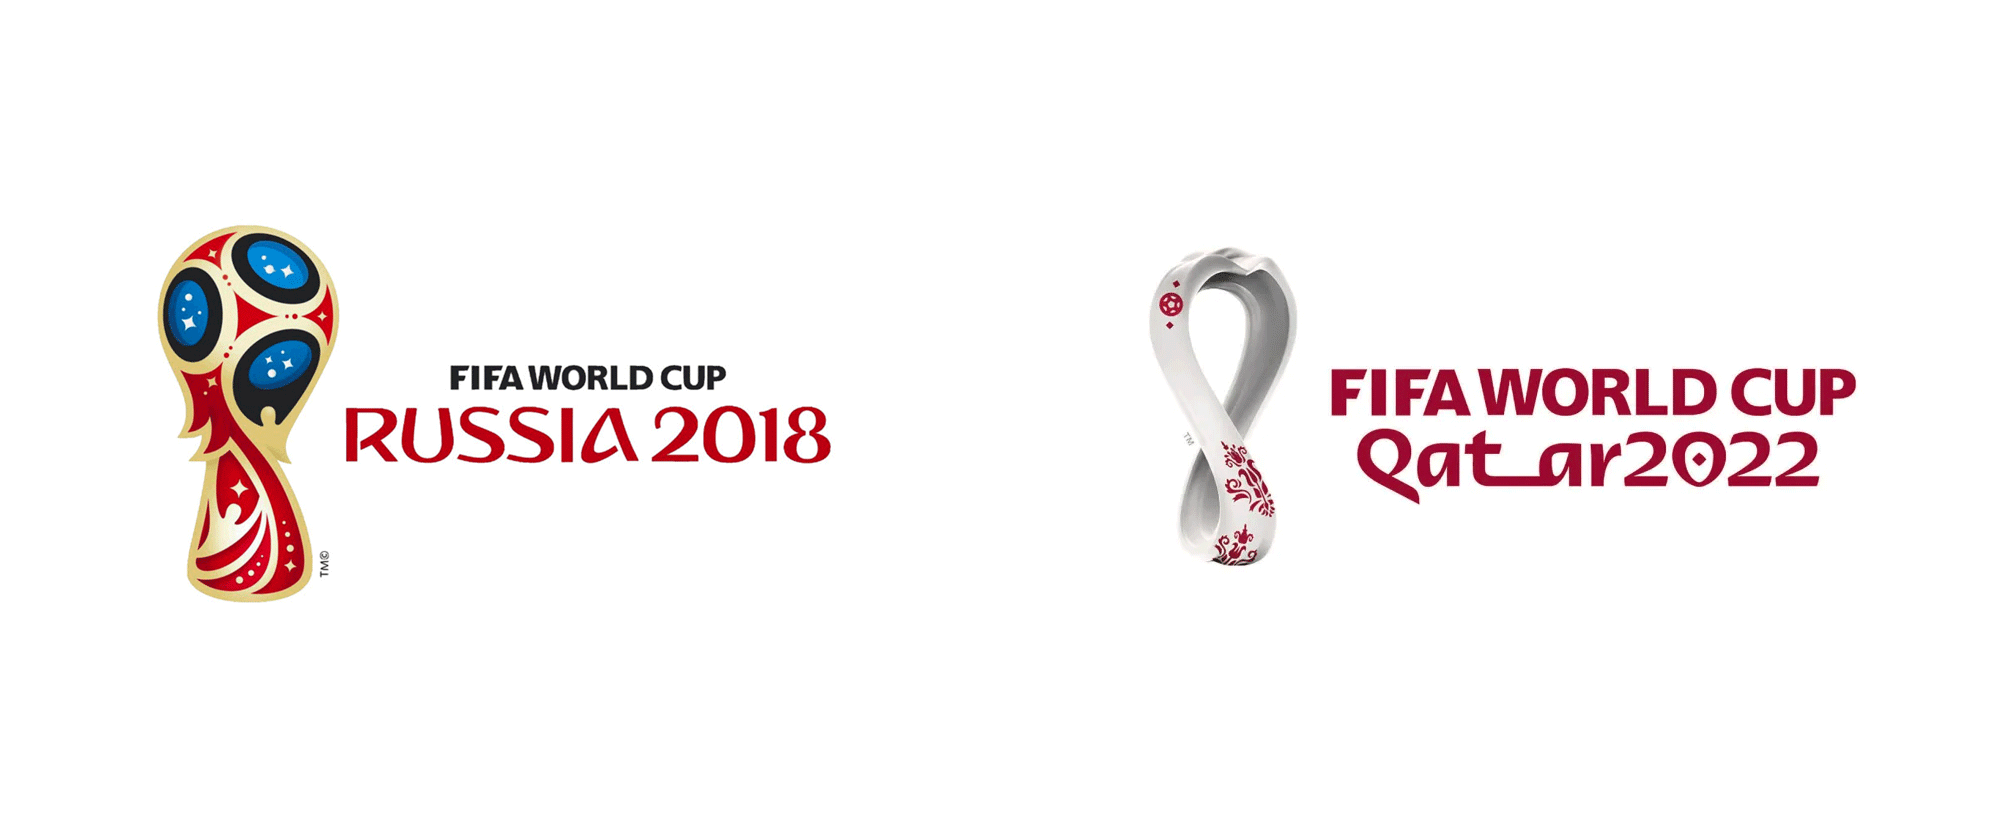 Brand New New Logo for Qatar 2022 FIFA World Cup by UnlockBrands